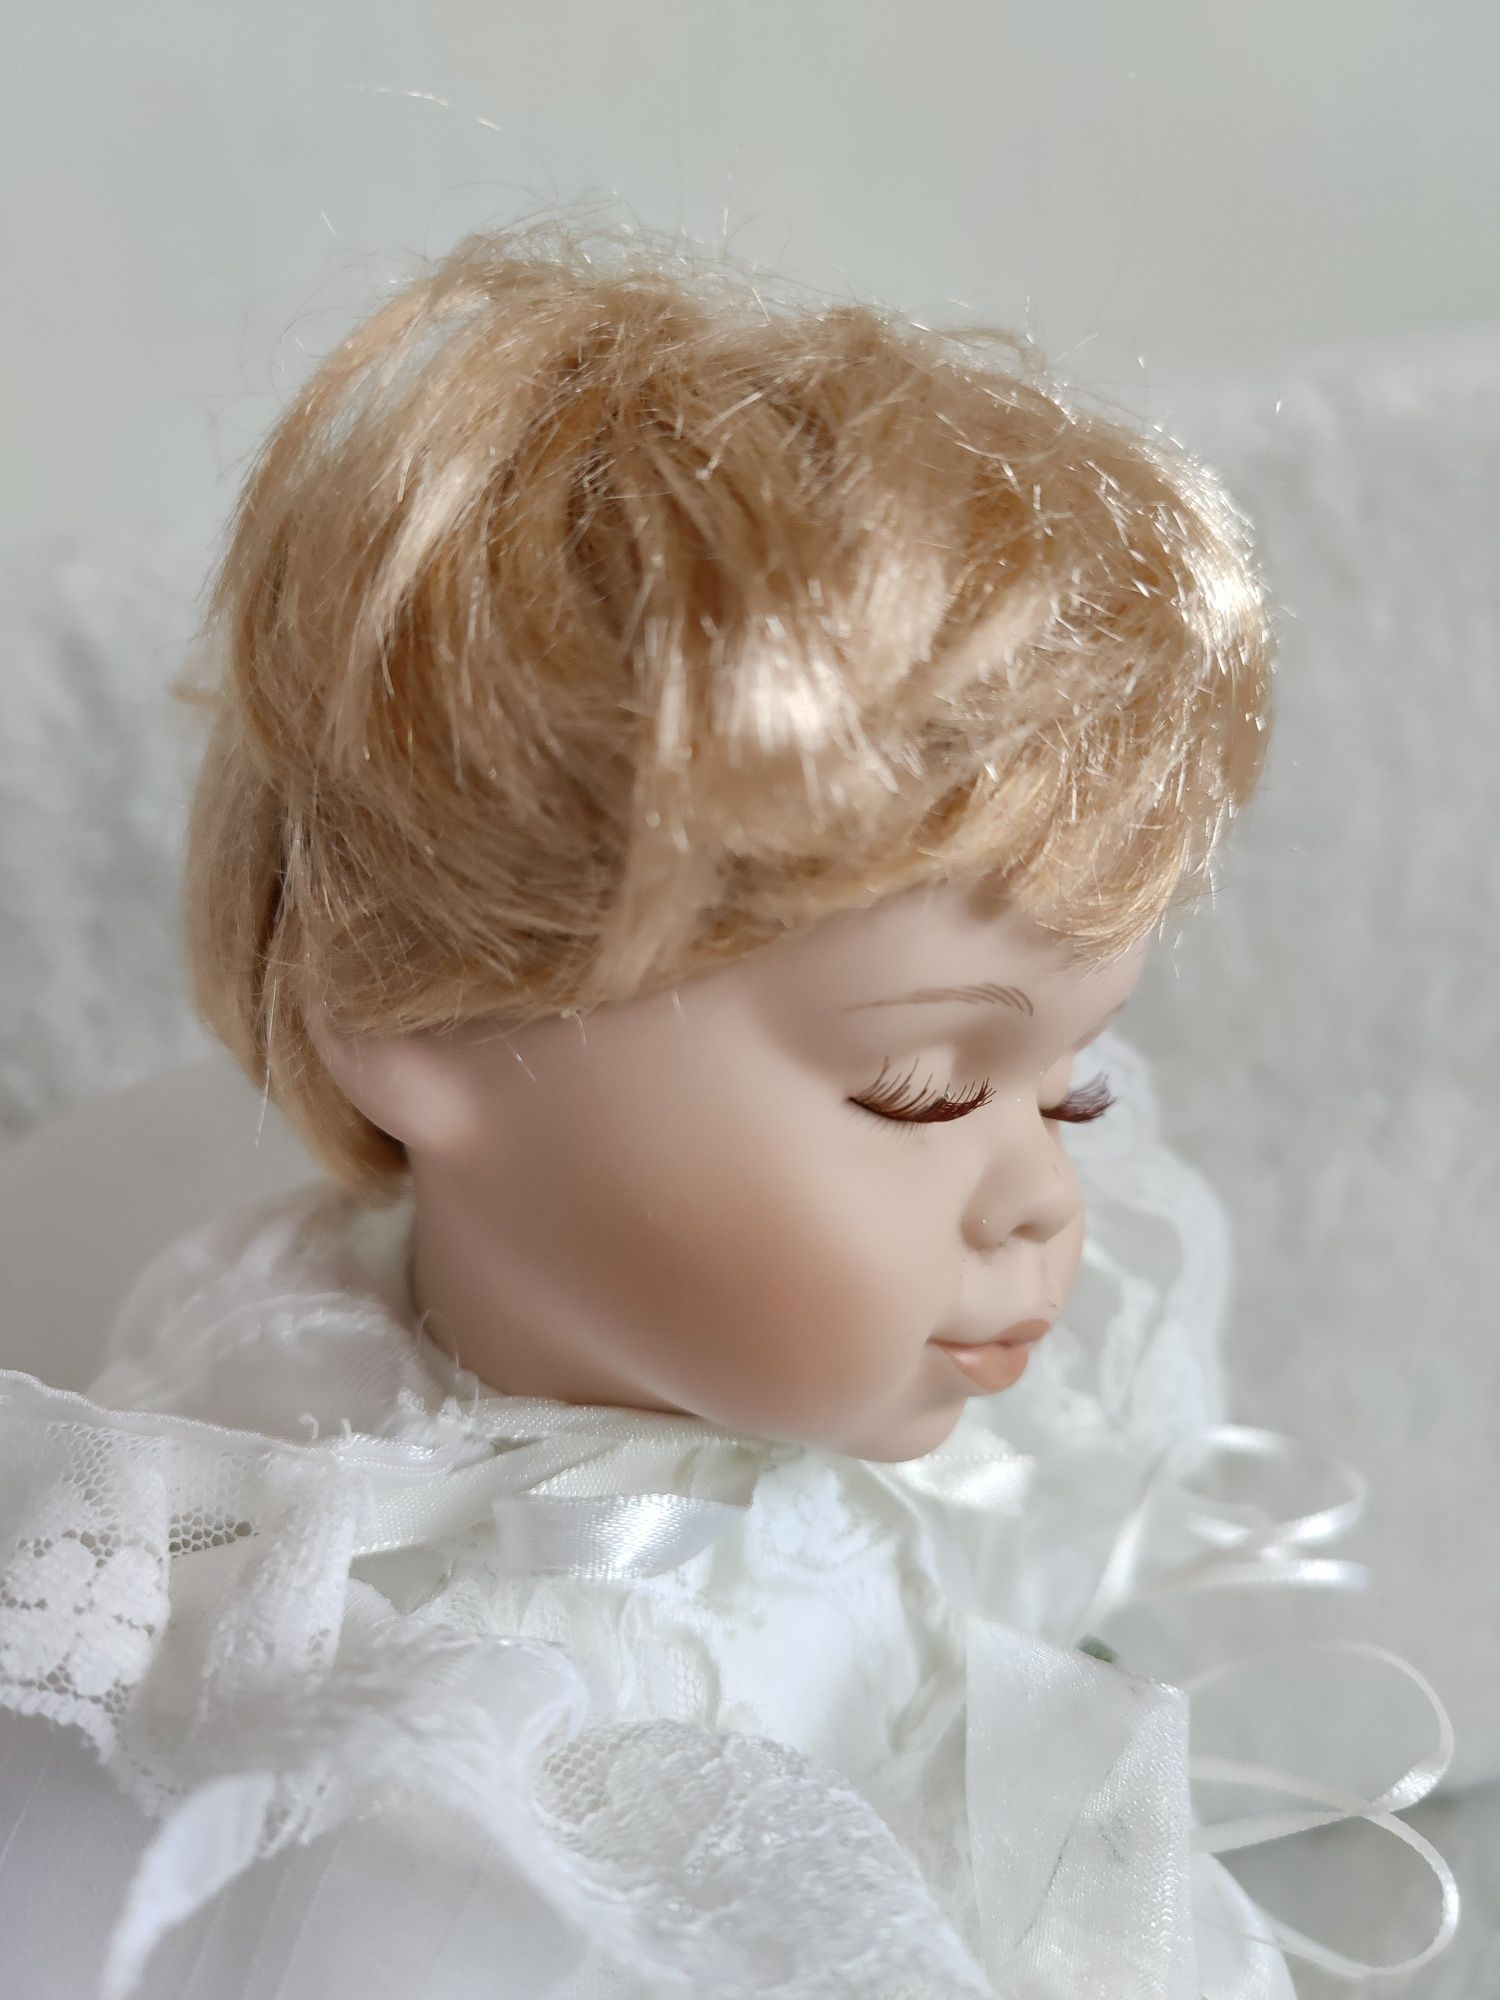 Śpiąca laleczka lalka porcelanowa PRL stara szafa babci